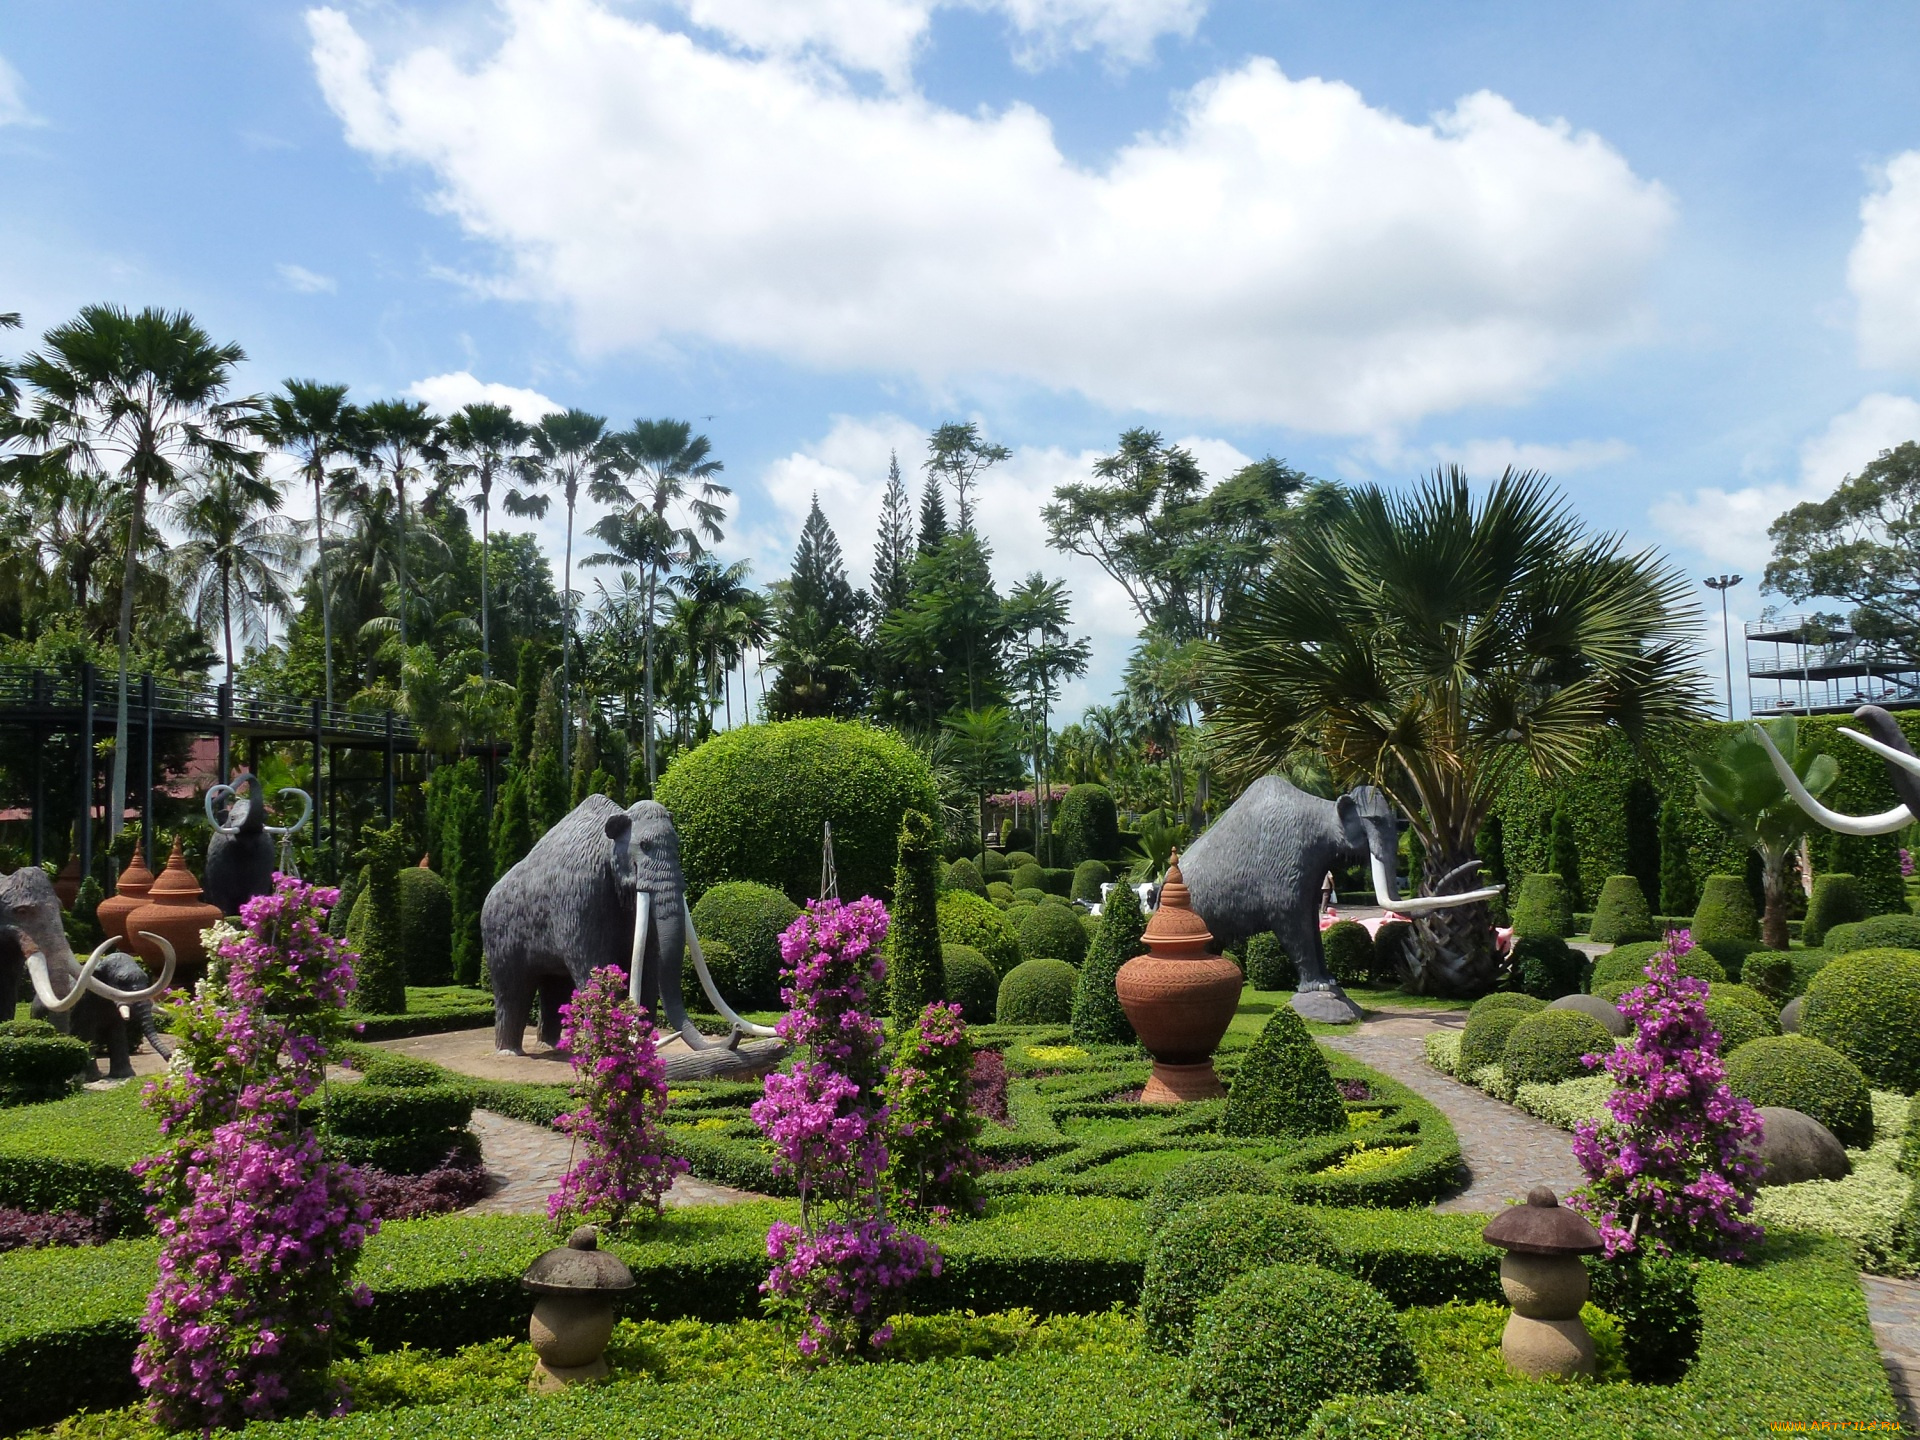 таиланд, разное, садовые, и, парковые, скульптуры, цветы, пальмы, мамонты, облака